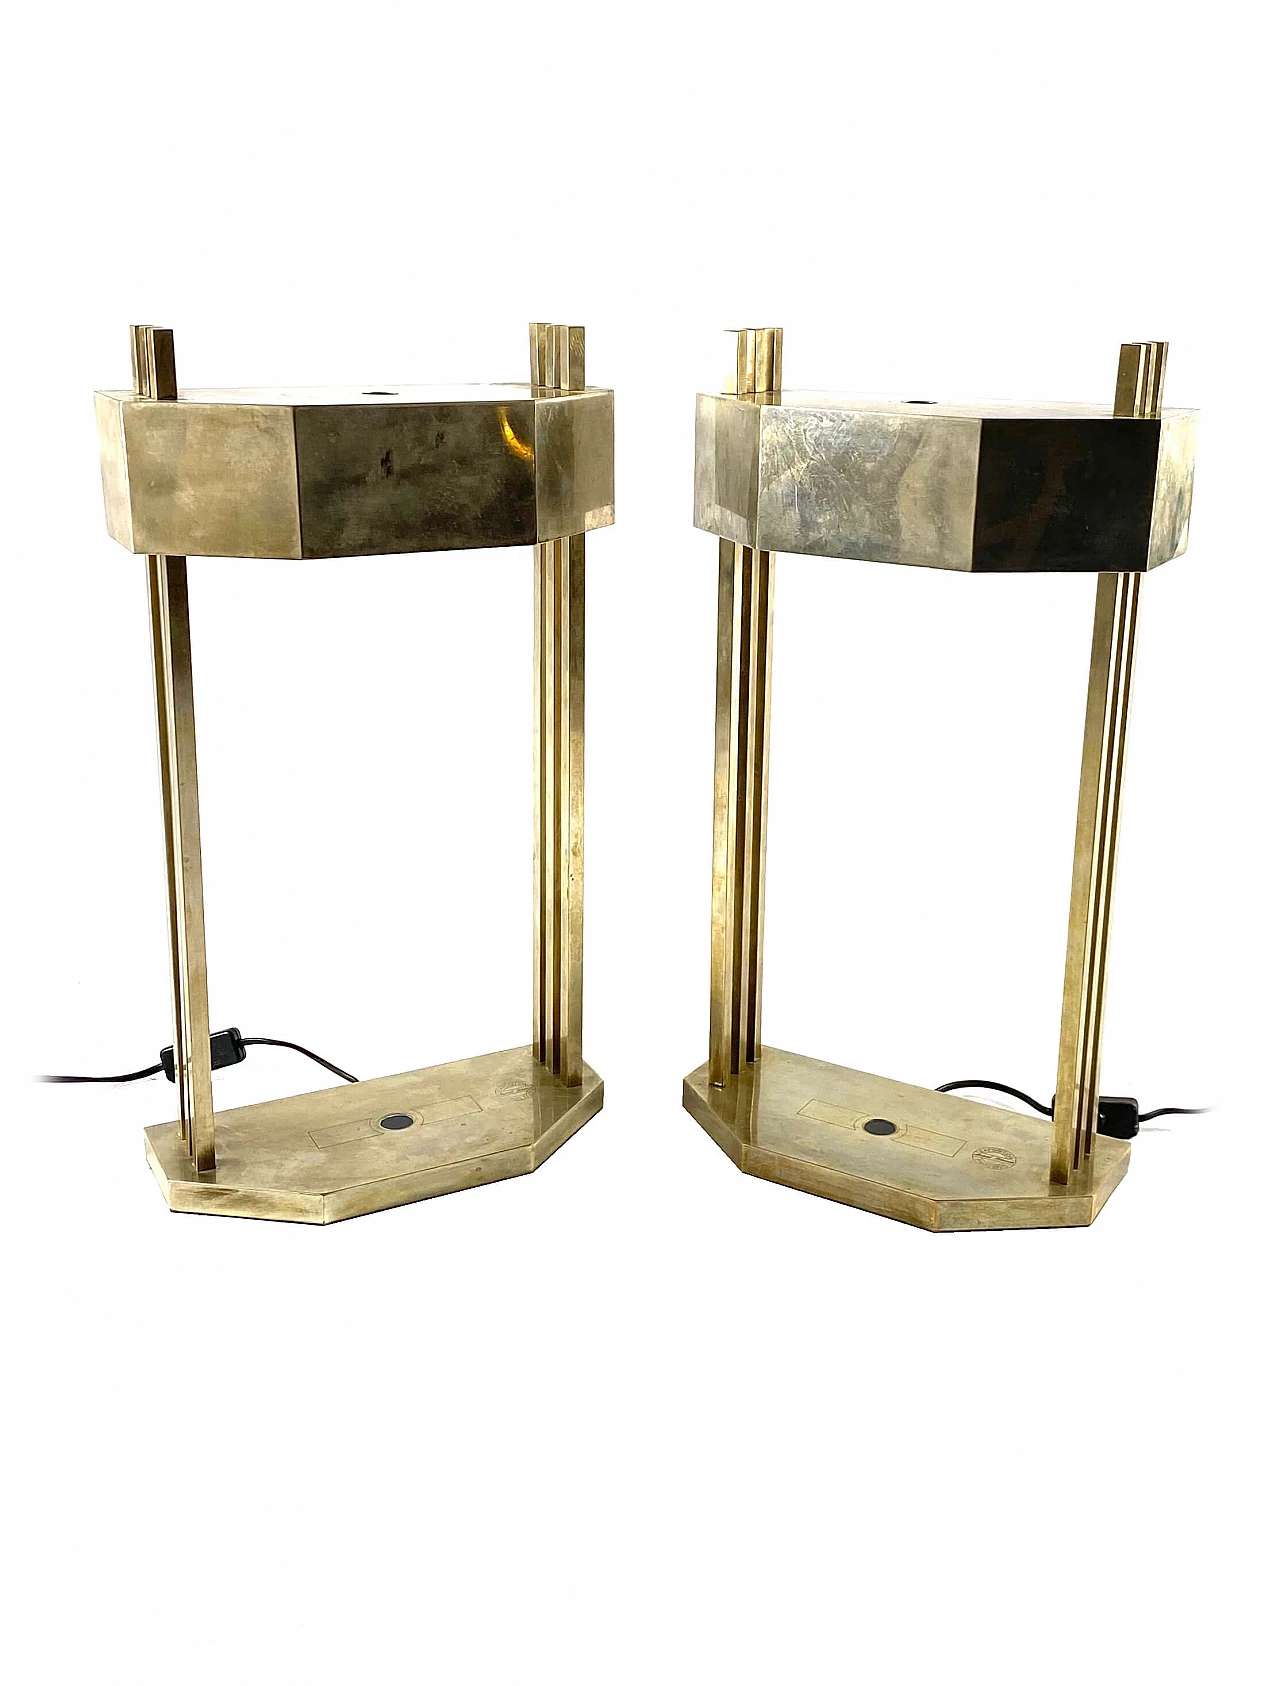 Pair of Bauhaus lamps by Marcel Breuer, designed for the Paris Expo 1925 1103437